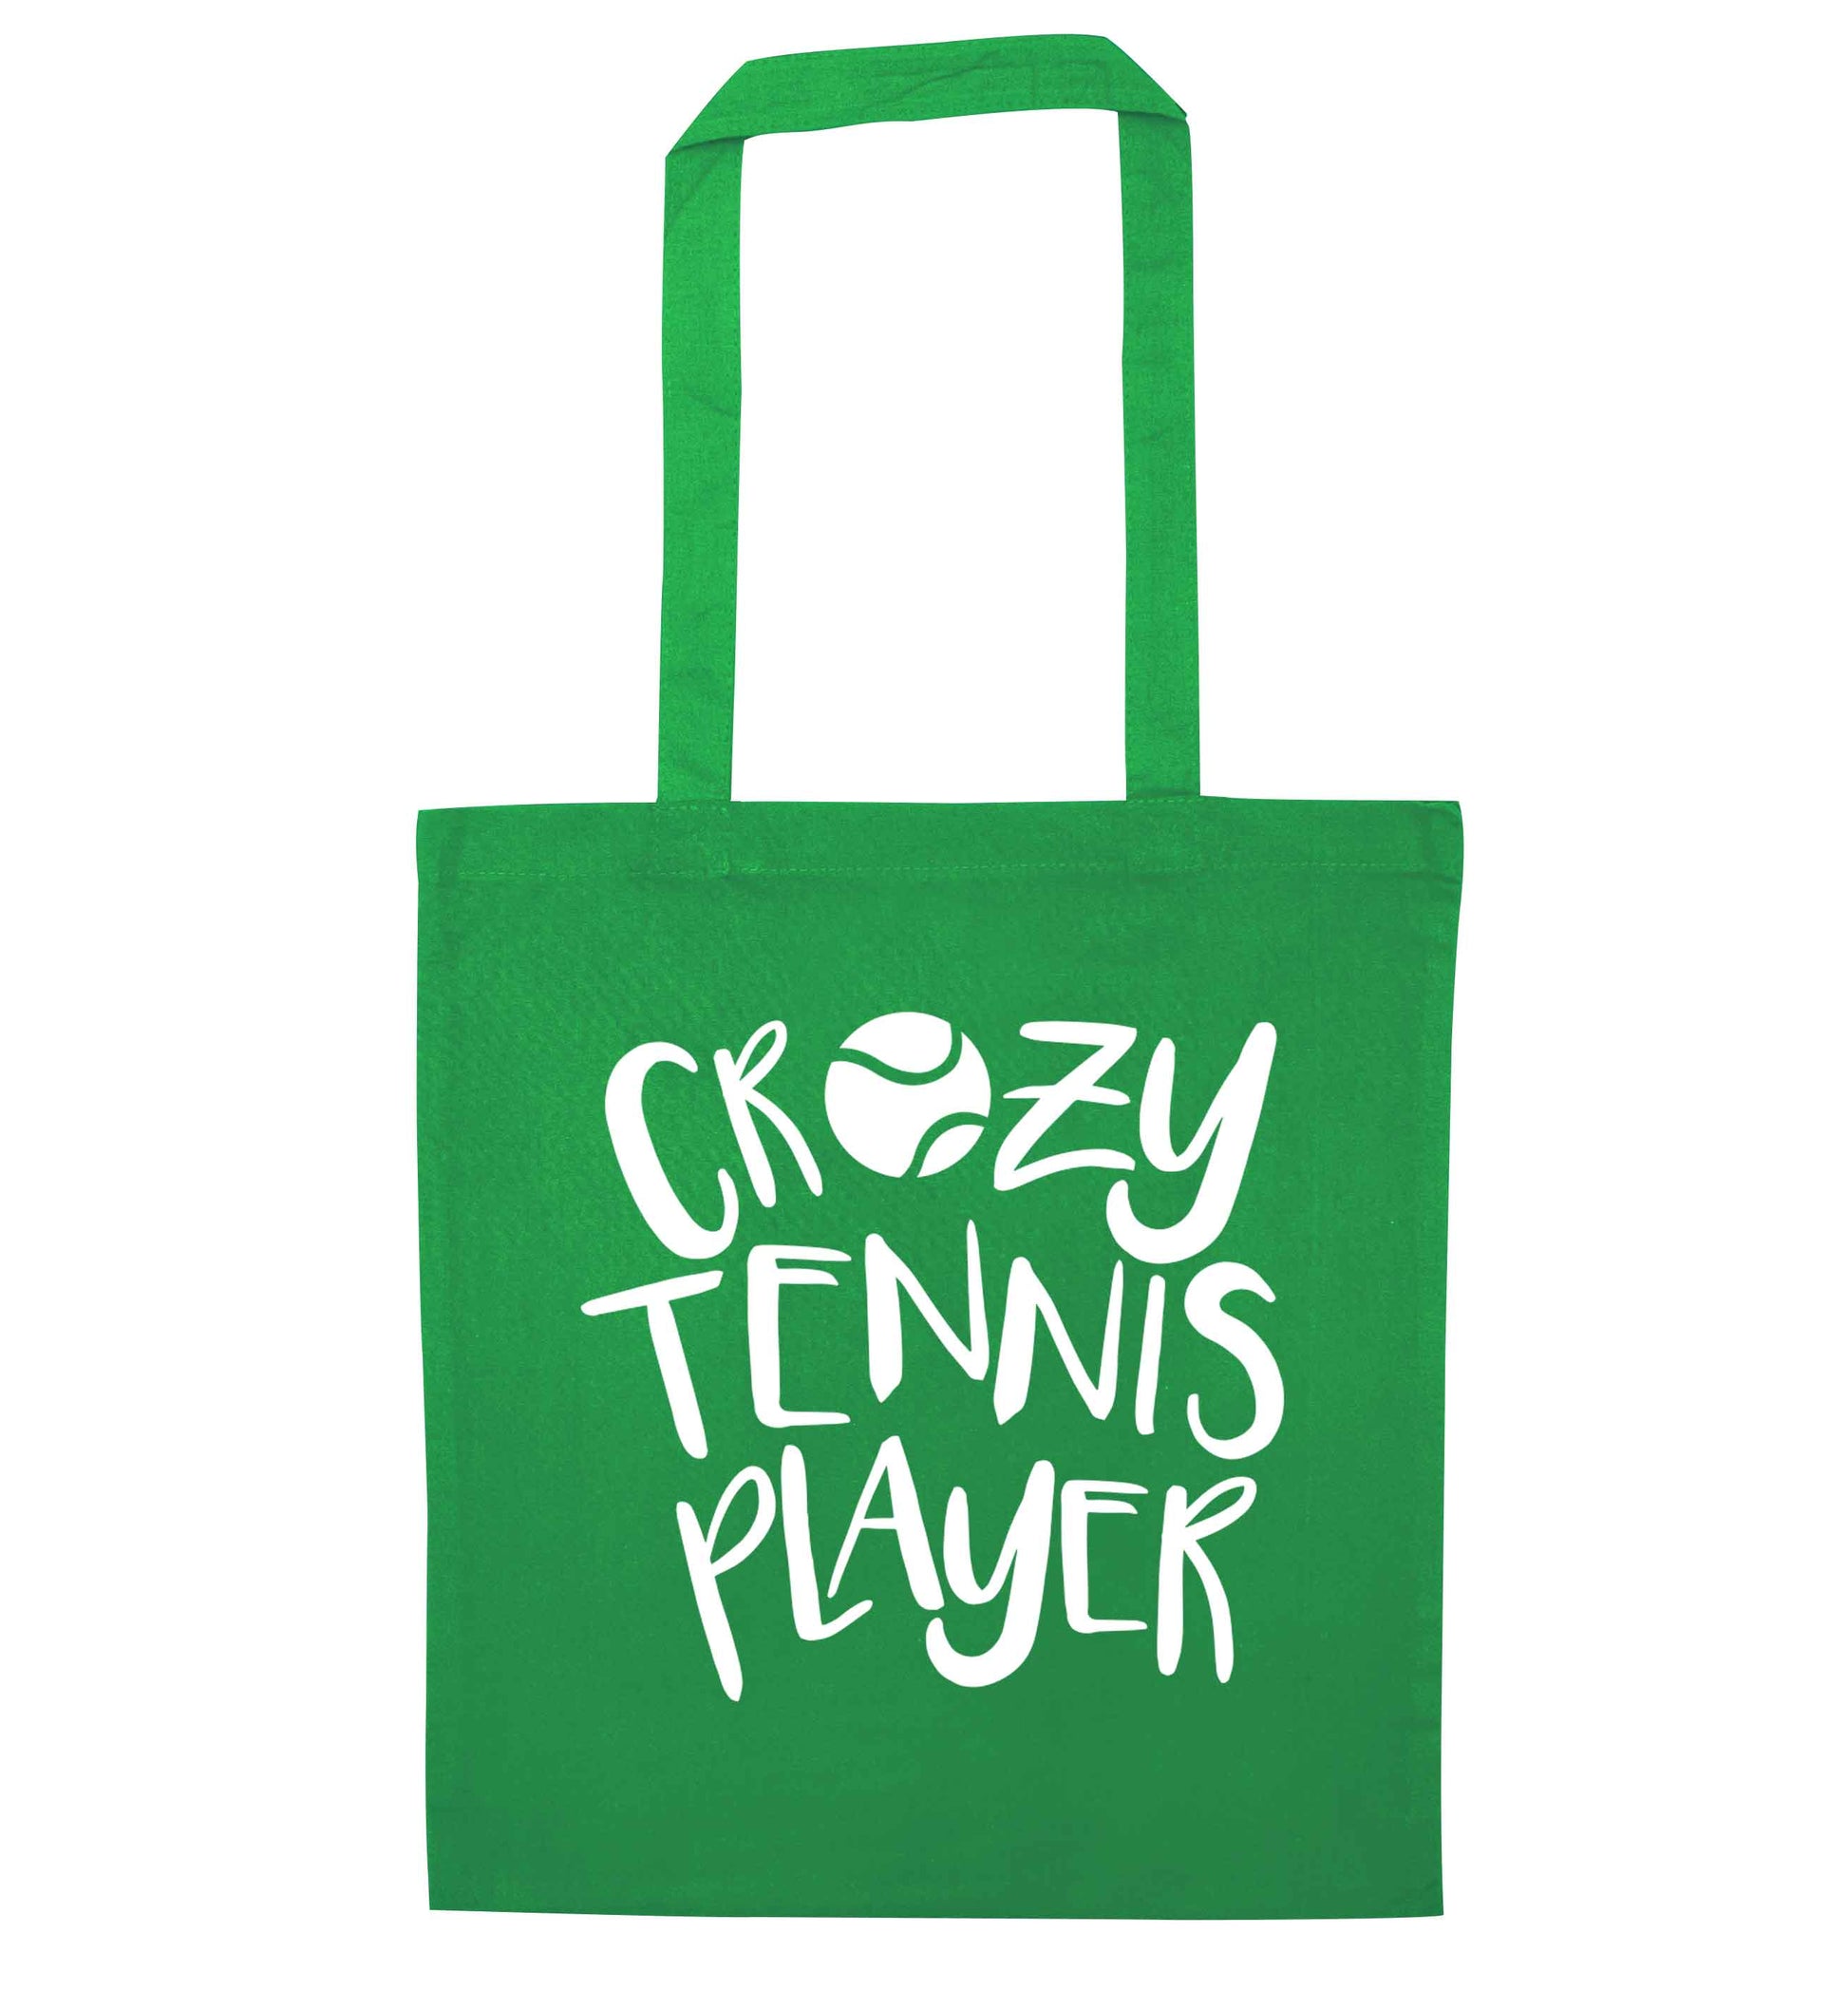 Crazy tennis player green tote bag